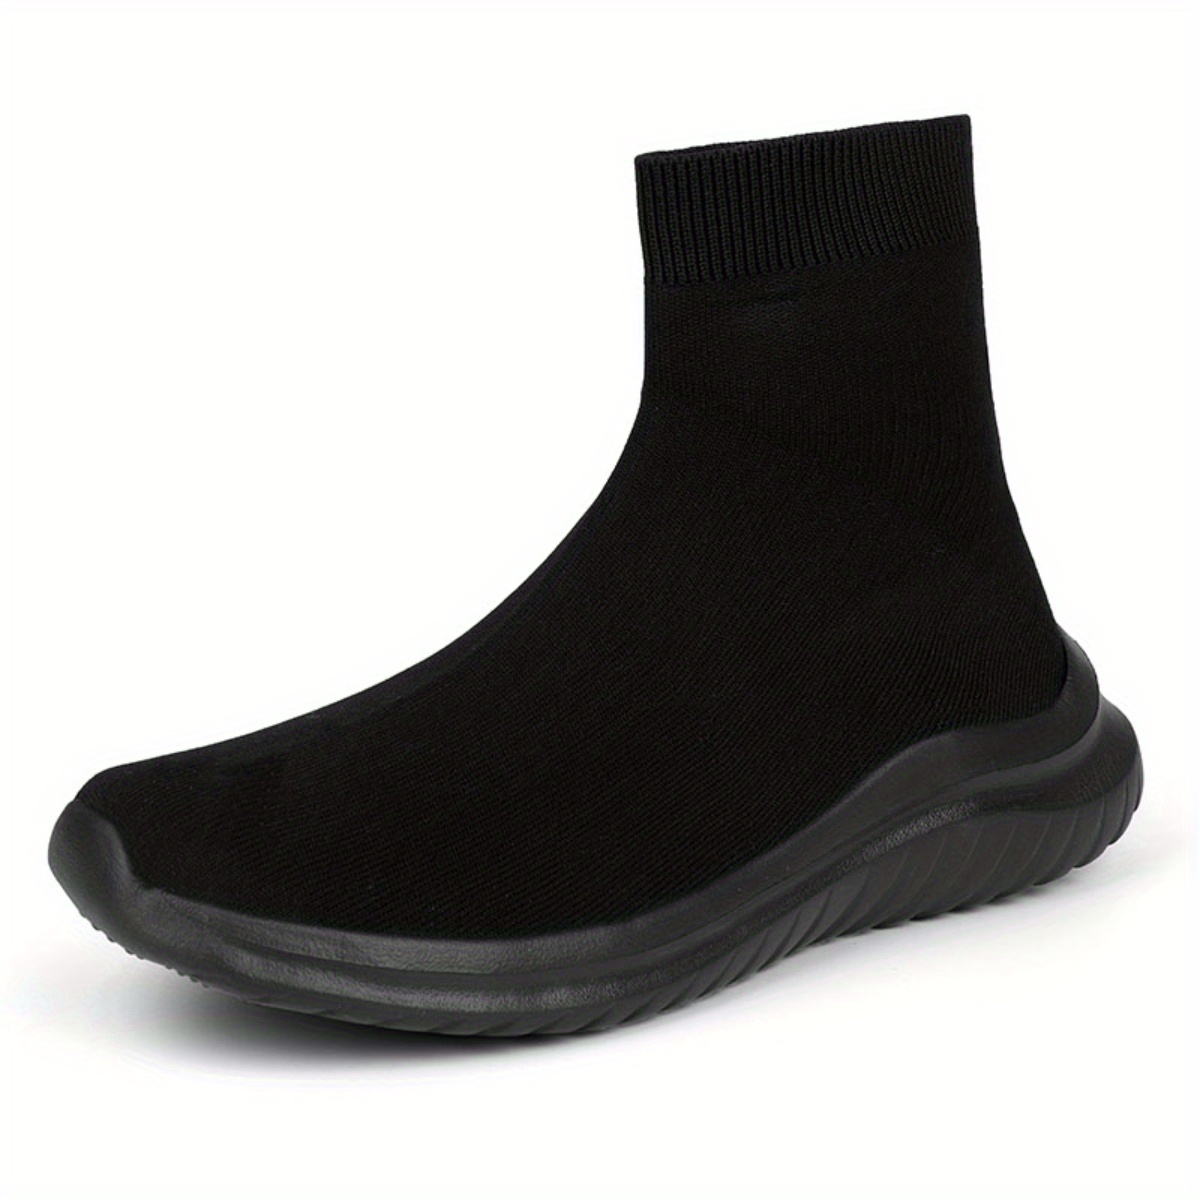 UMYOGO Men's Casual Shoes Fashion Sports Skateboard Shoes Comfort  Walking Sz 10